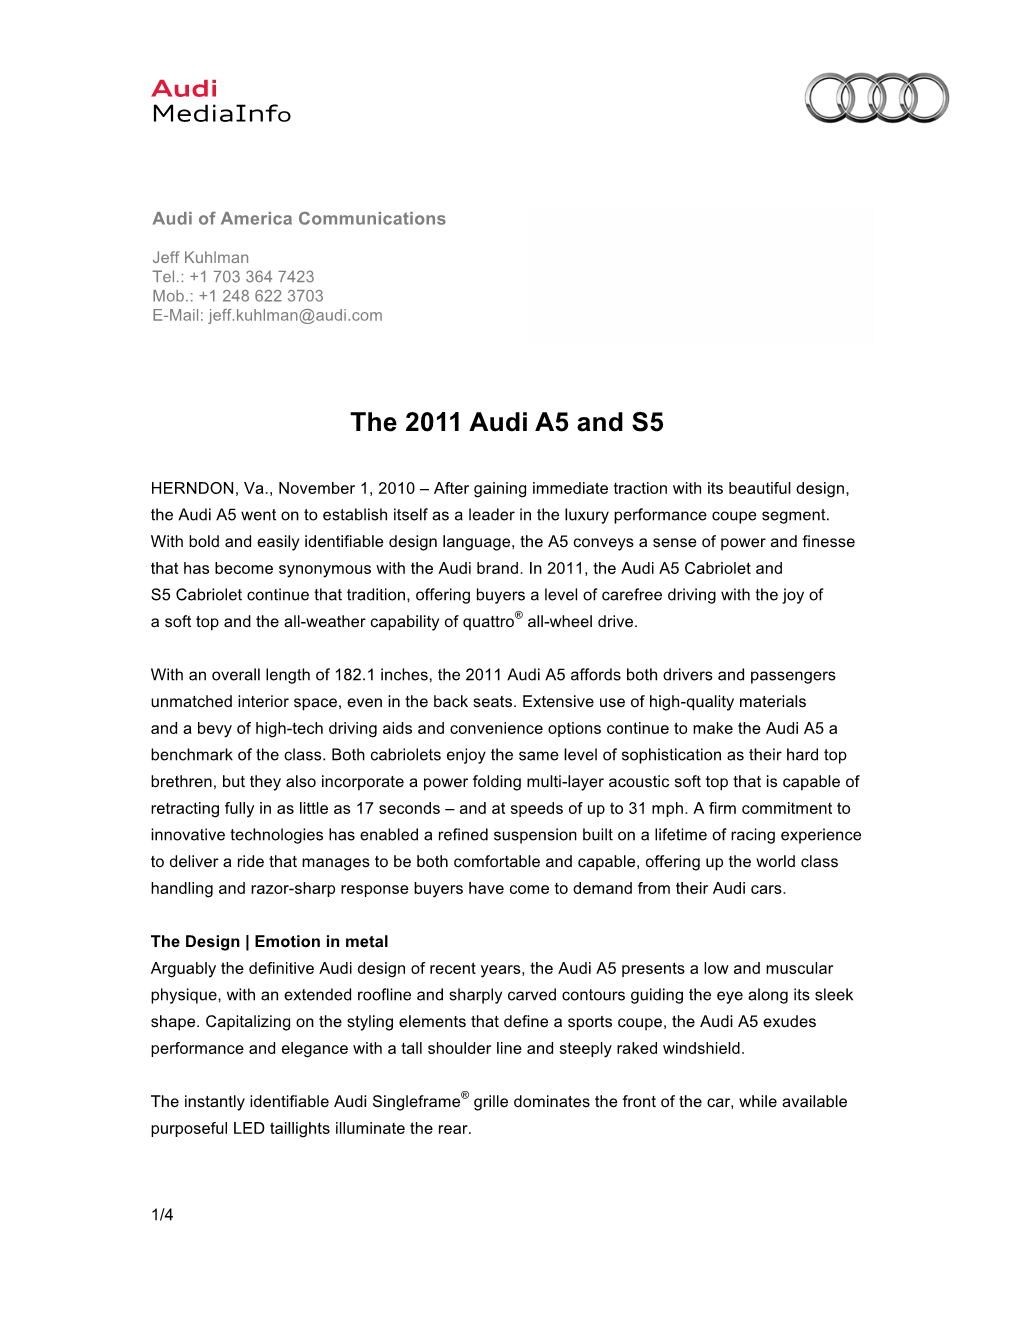 2011 Audi A5/S5 Media Information